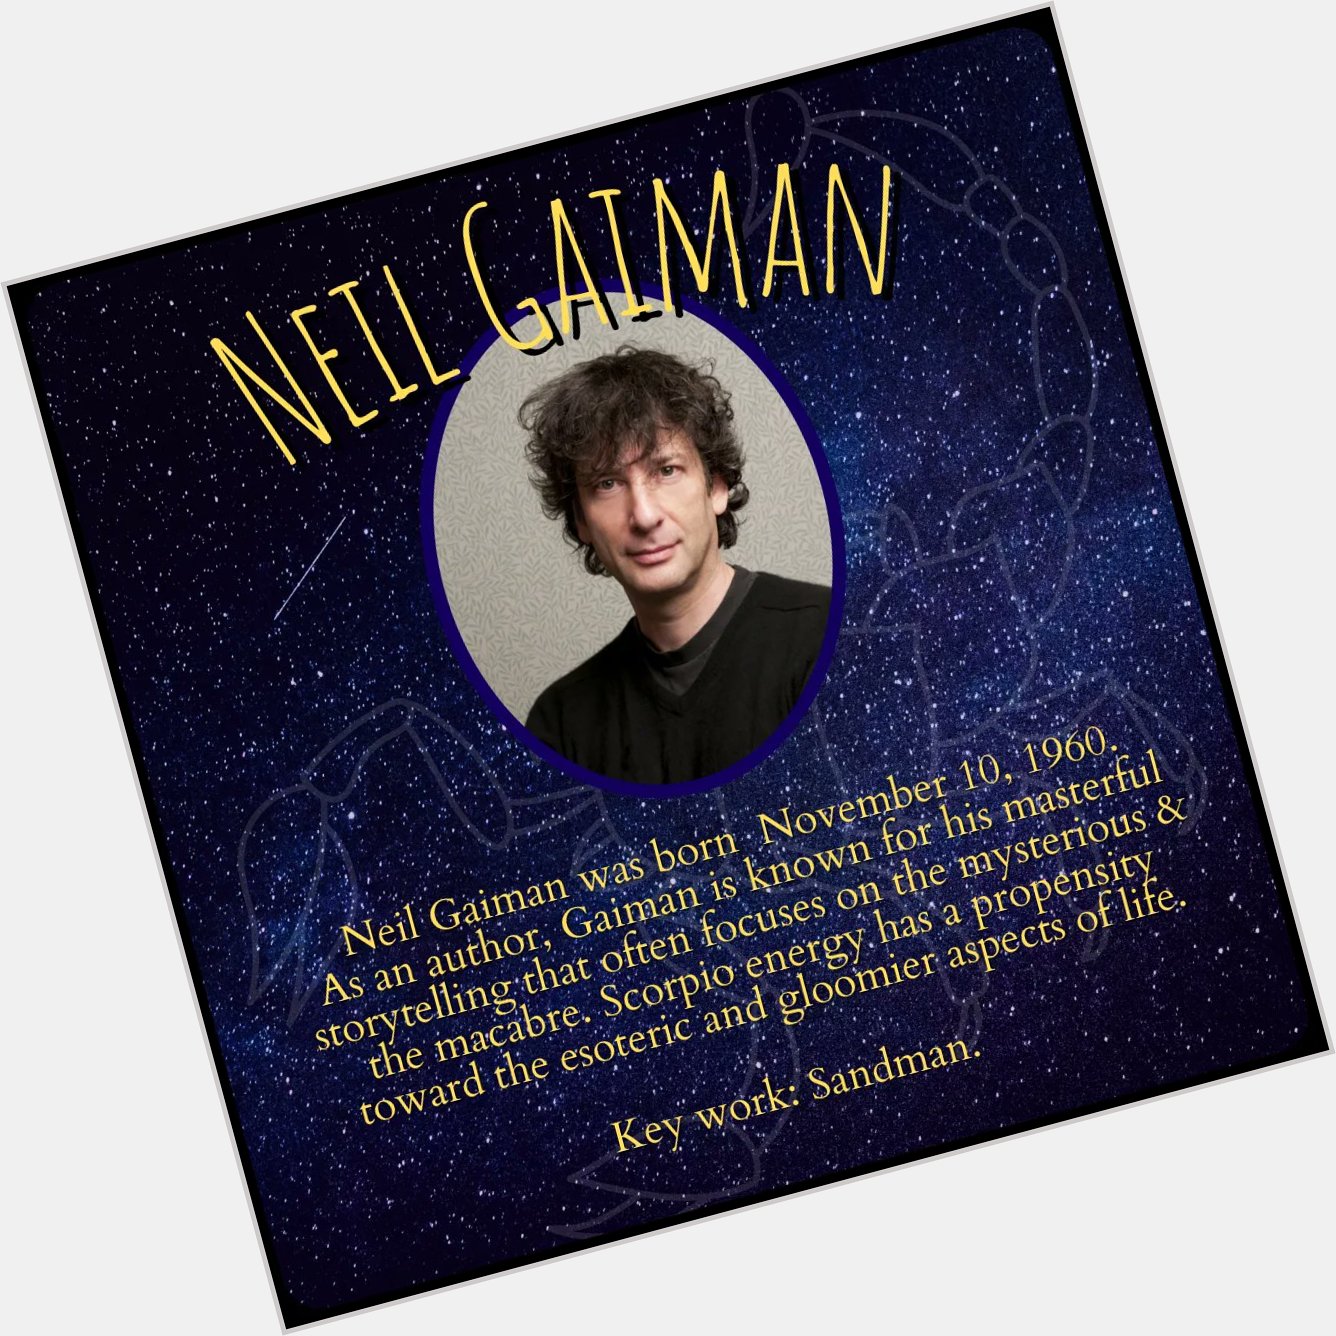 Happy birthday to Scorpio author, Neil Gaiman! 